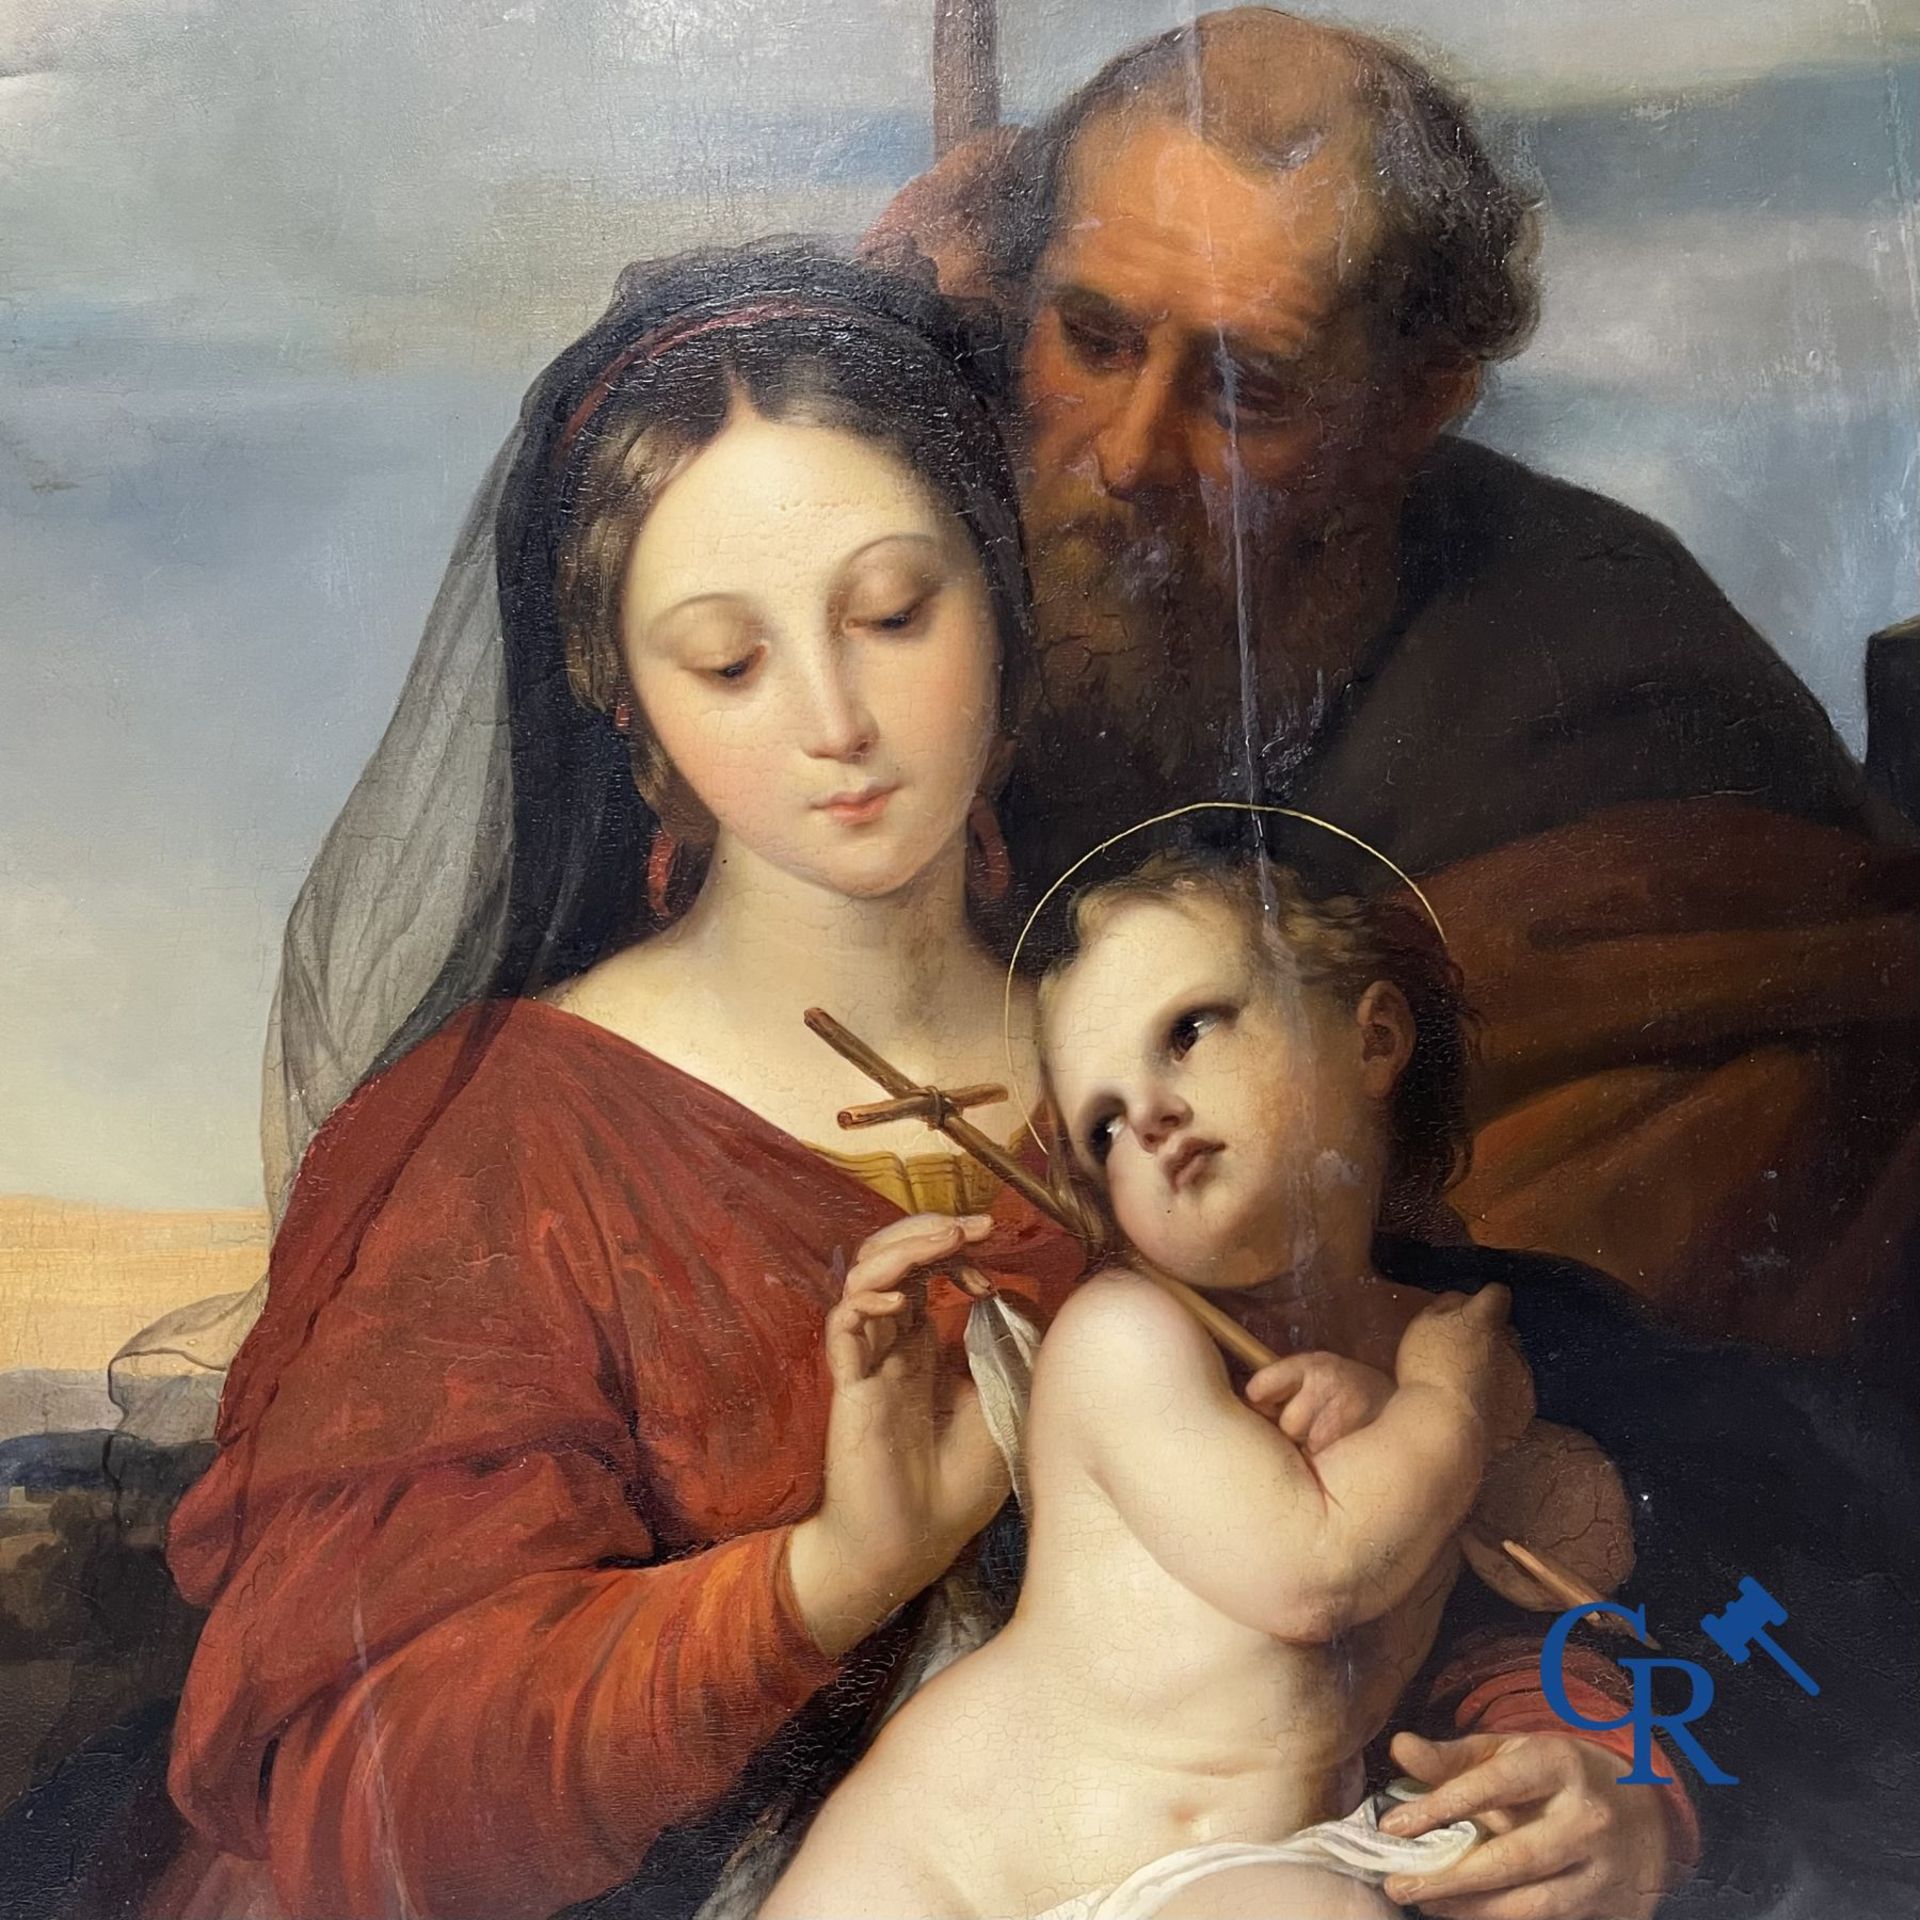 Painting: Lambert Mathieu (Bury 1804 - Leuven 1861) Holy Family in the manner of Raphael Sanzio. Oil